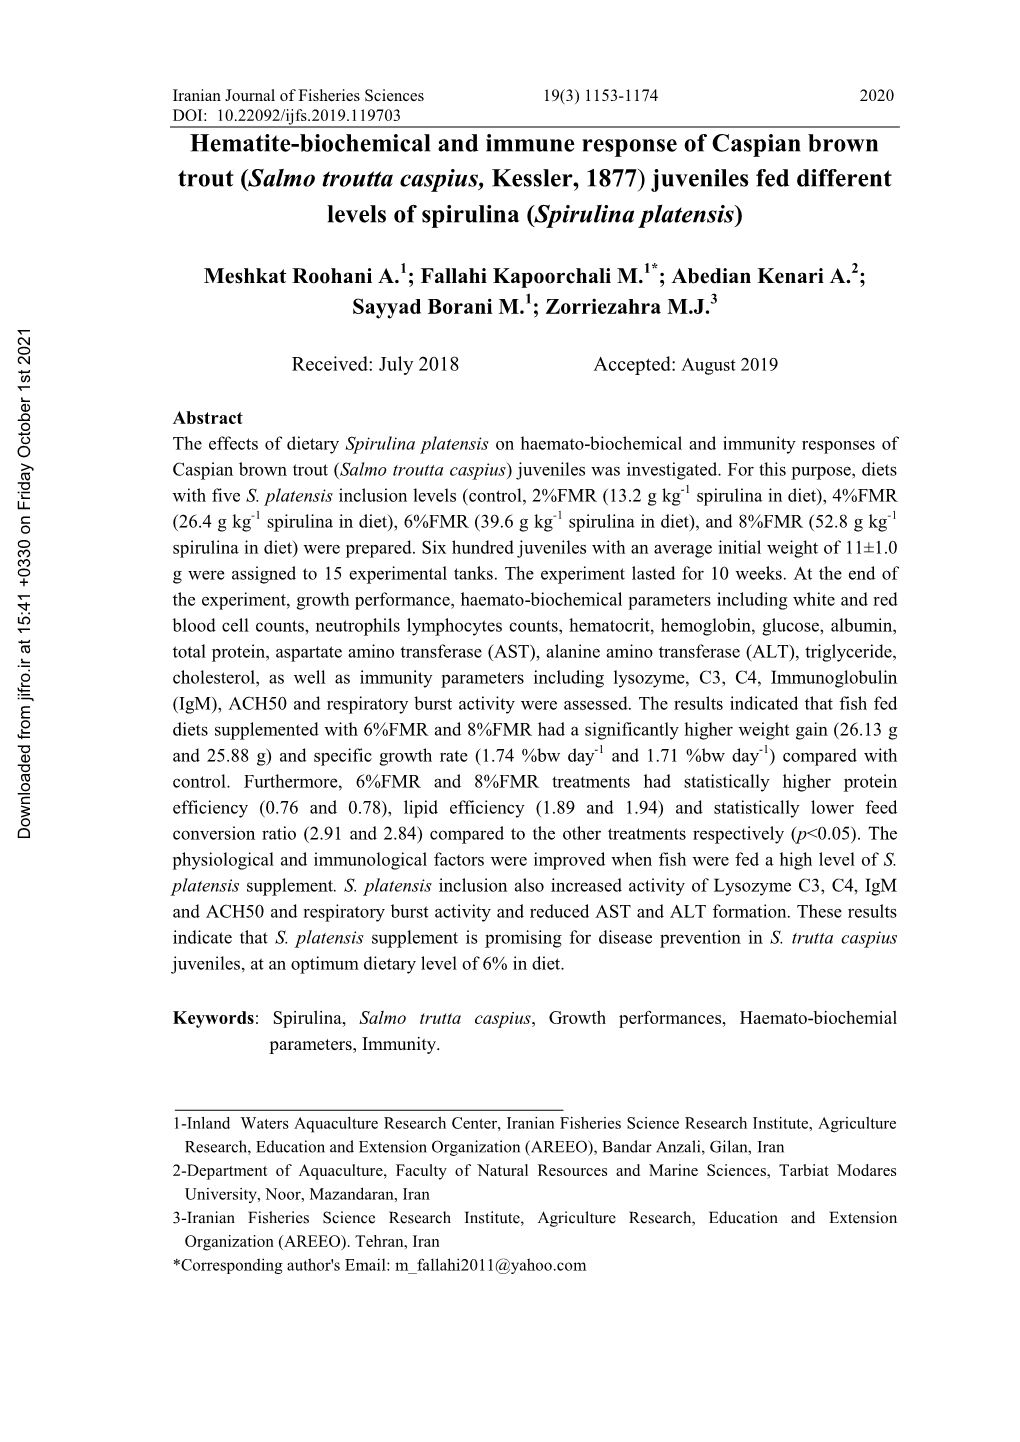 Hematite-Biochemical and Immune Response of Caspian Brown Trout (Salmo Troutta Caspius, Kessler, ) Juveniles Fed Different Levels of Spirulina (Spirulina Platensis)